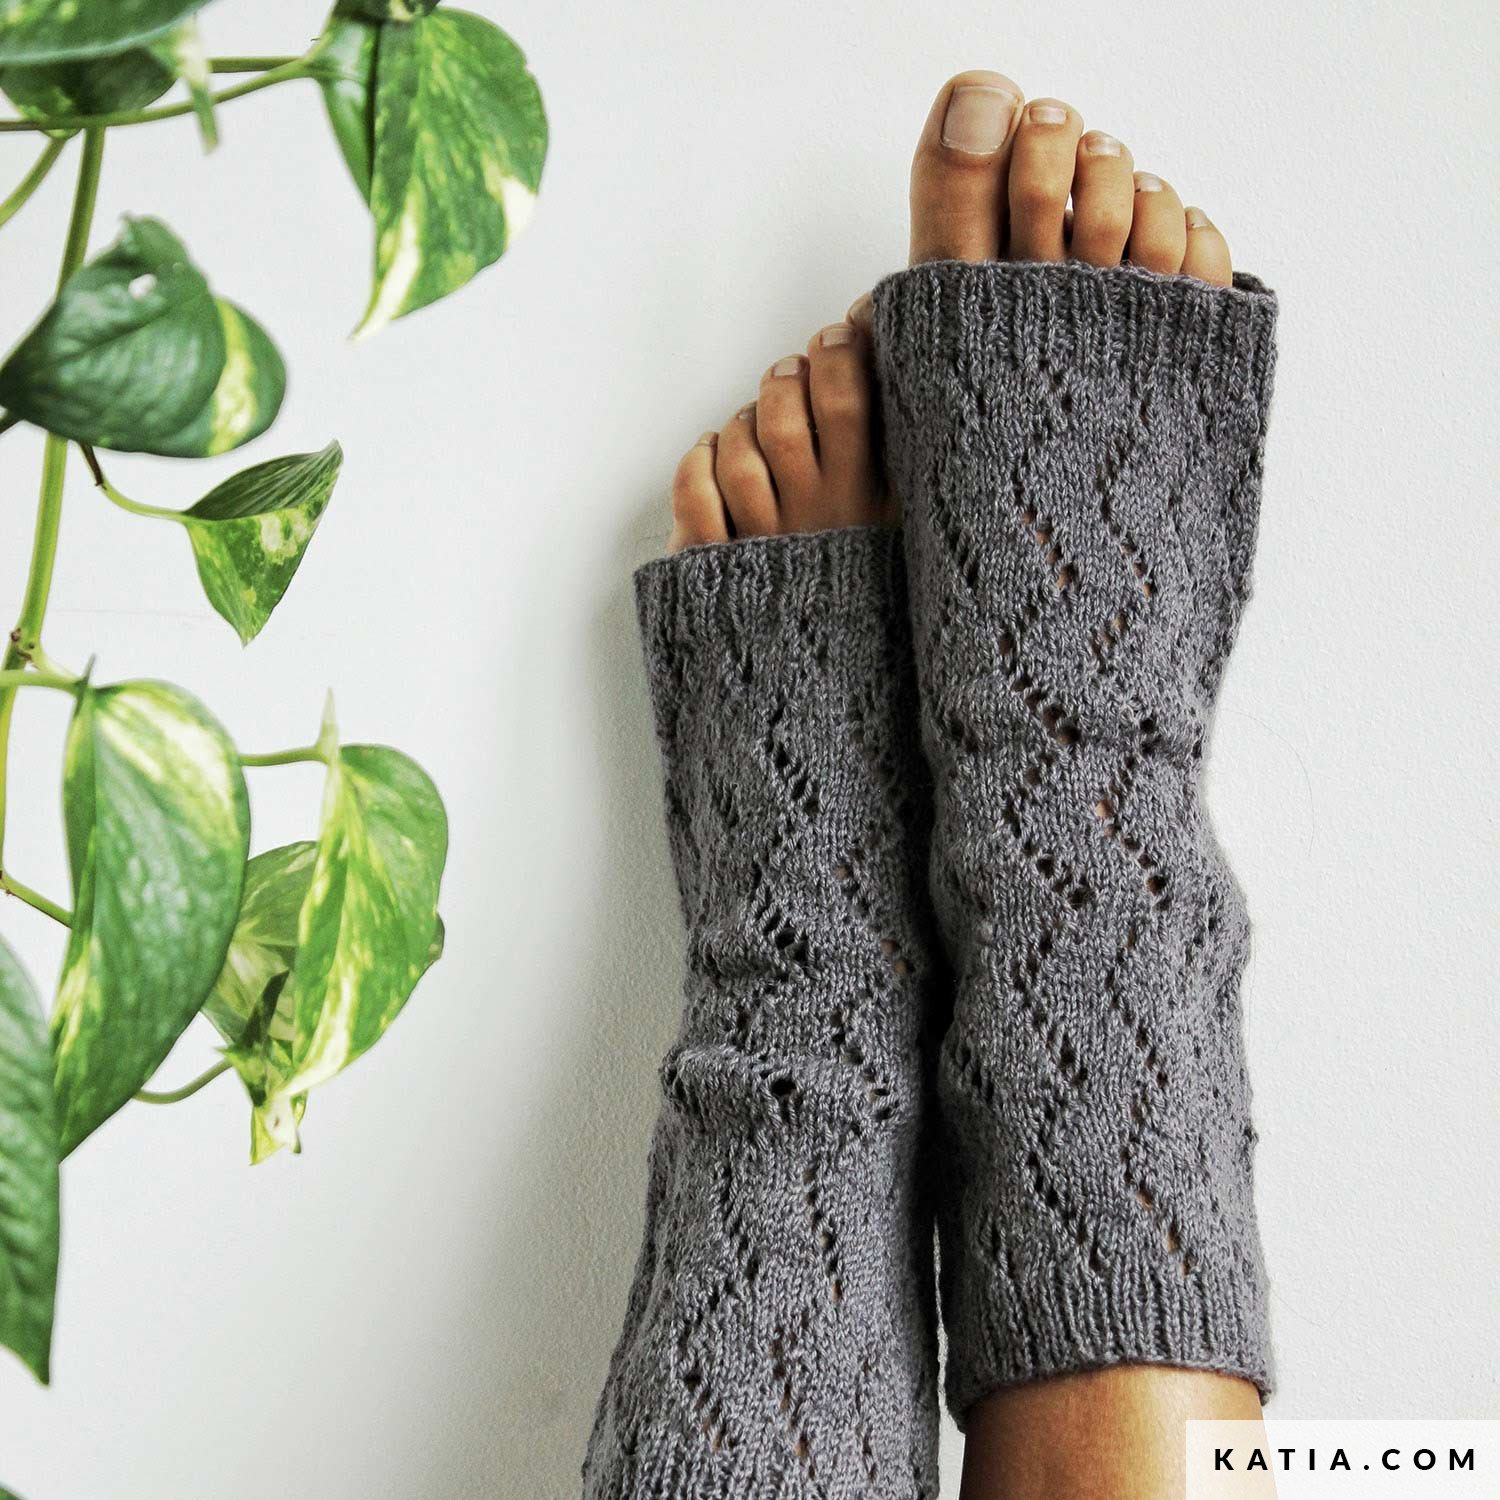 Yoga socks - Socks - Autumn / Winter - models & patterns